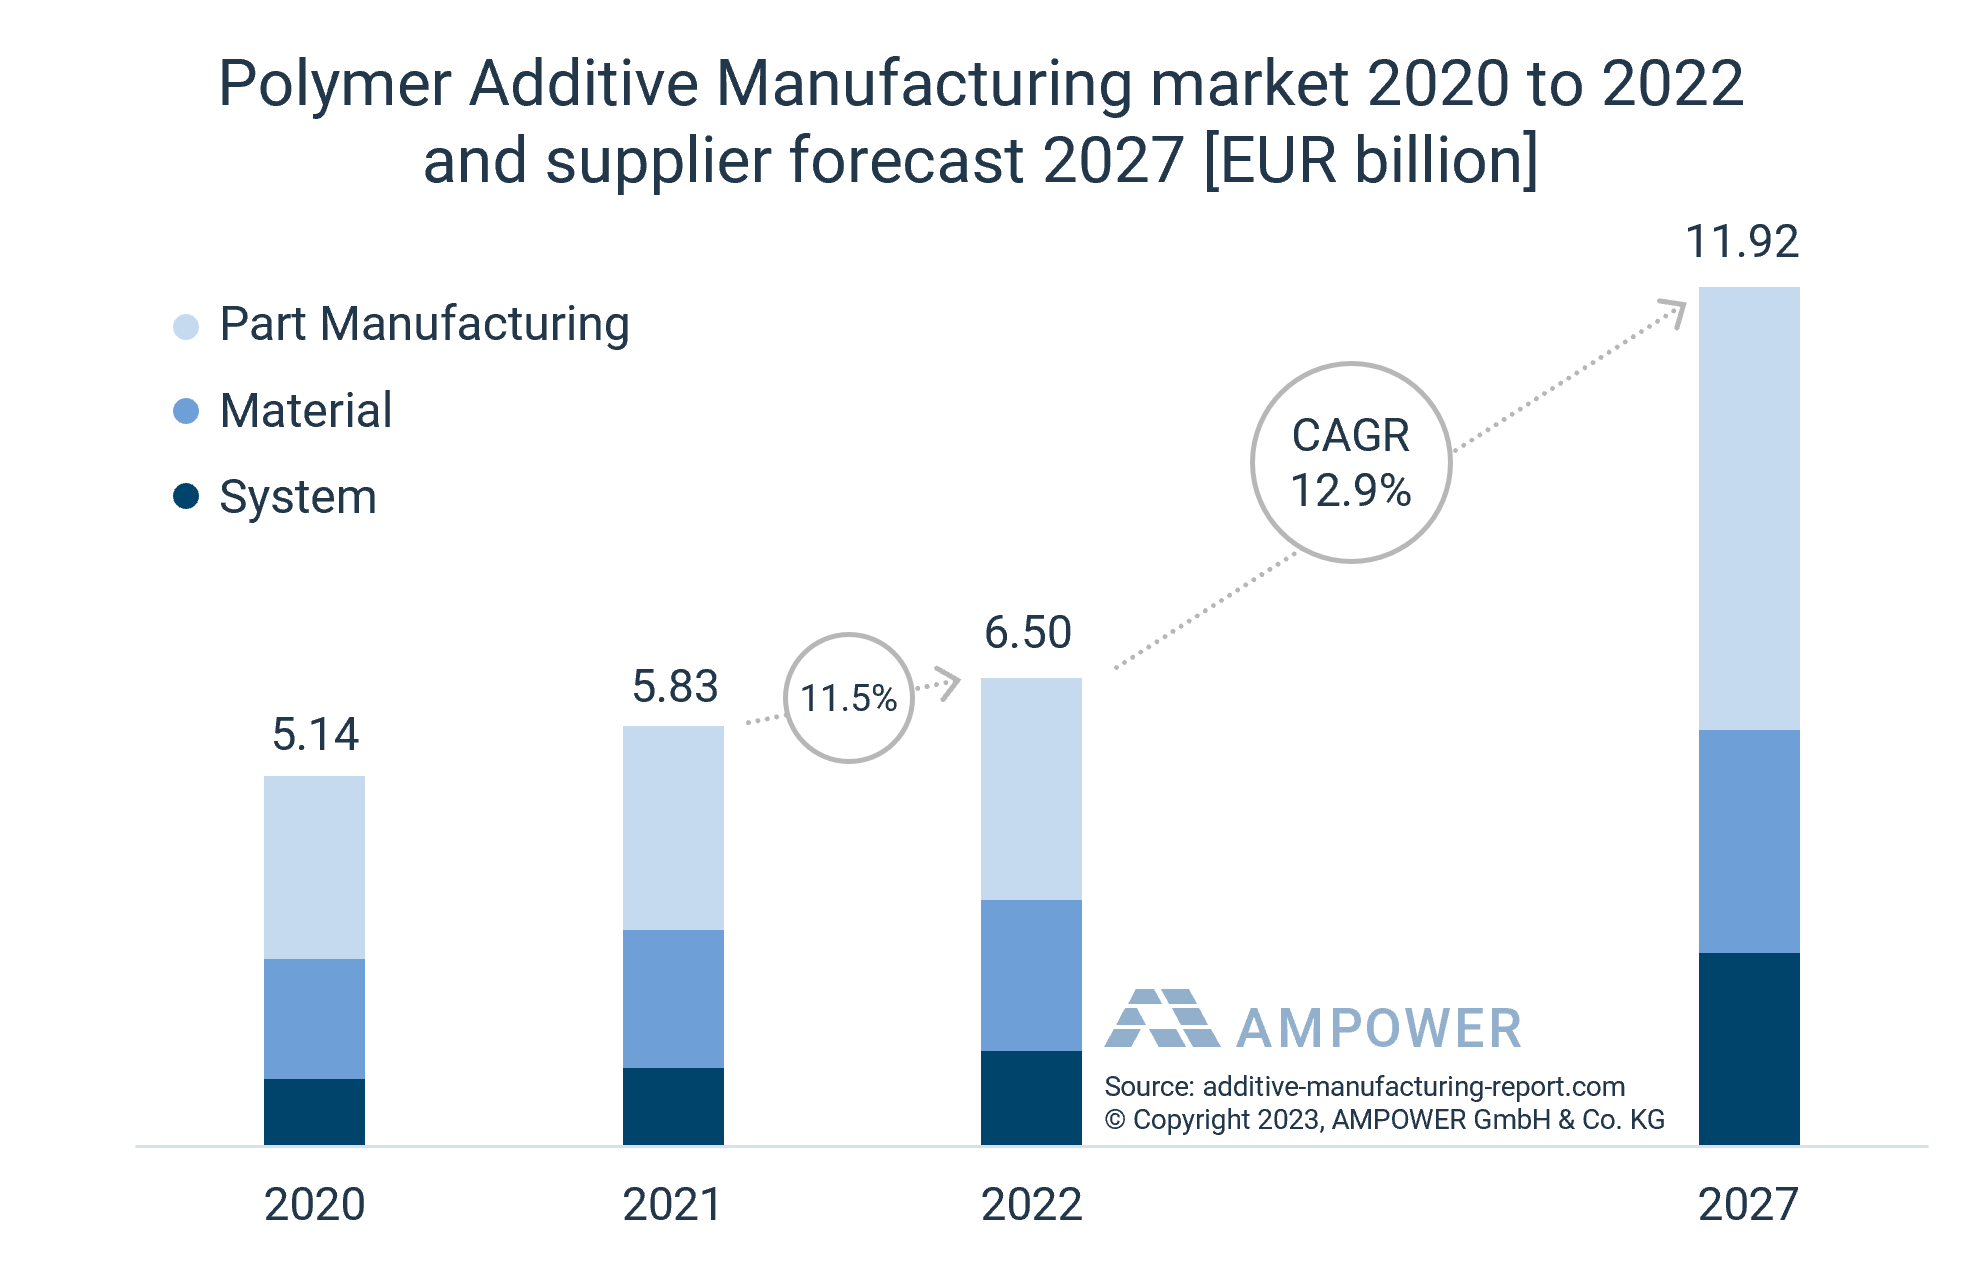 Polymer Additive Manufacturing market 2022 and supplier forecast 2027 [EUR billion]